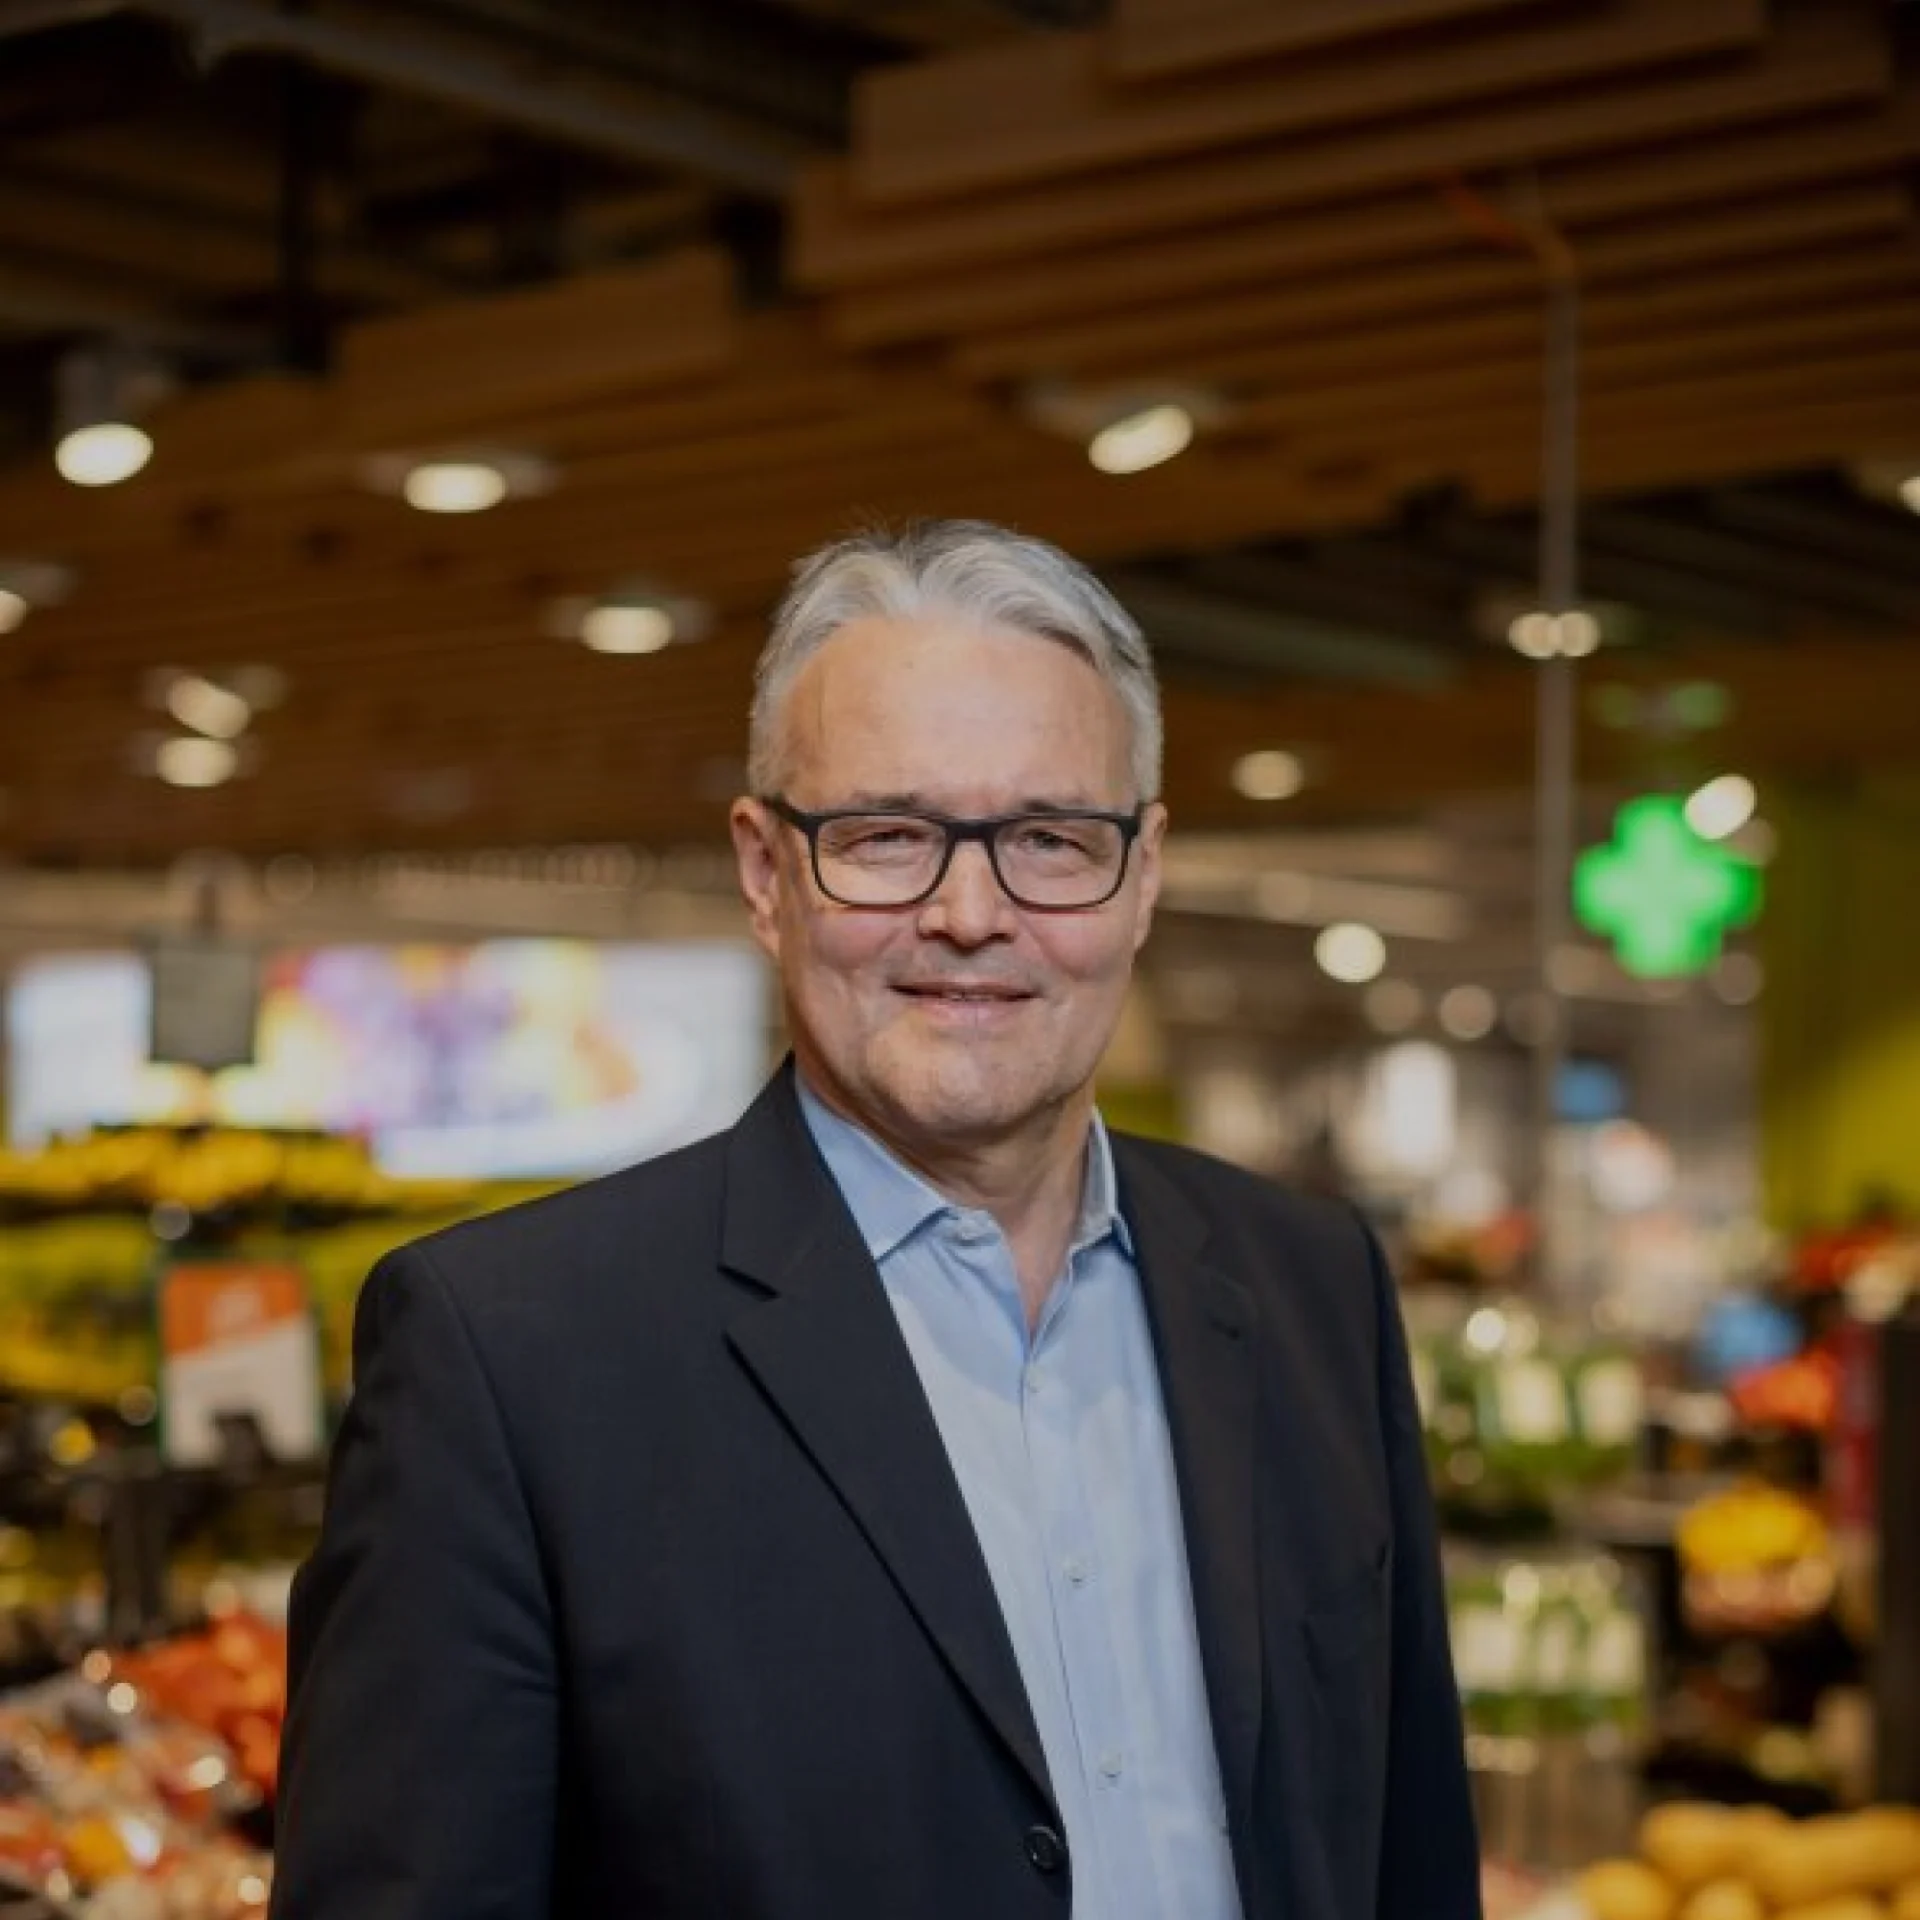 Peter Diethelm in the supermarket